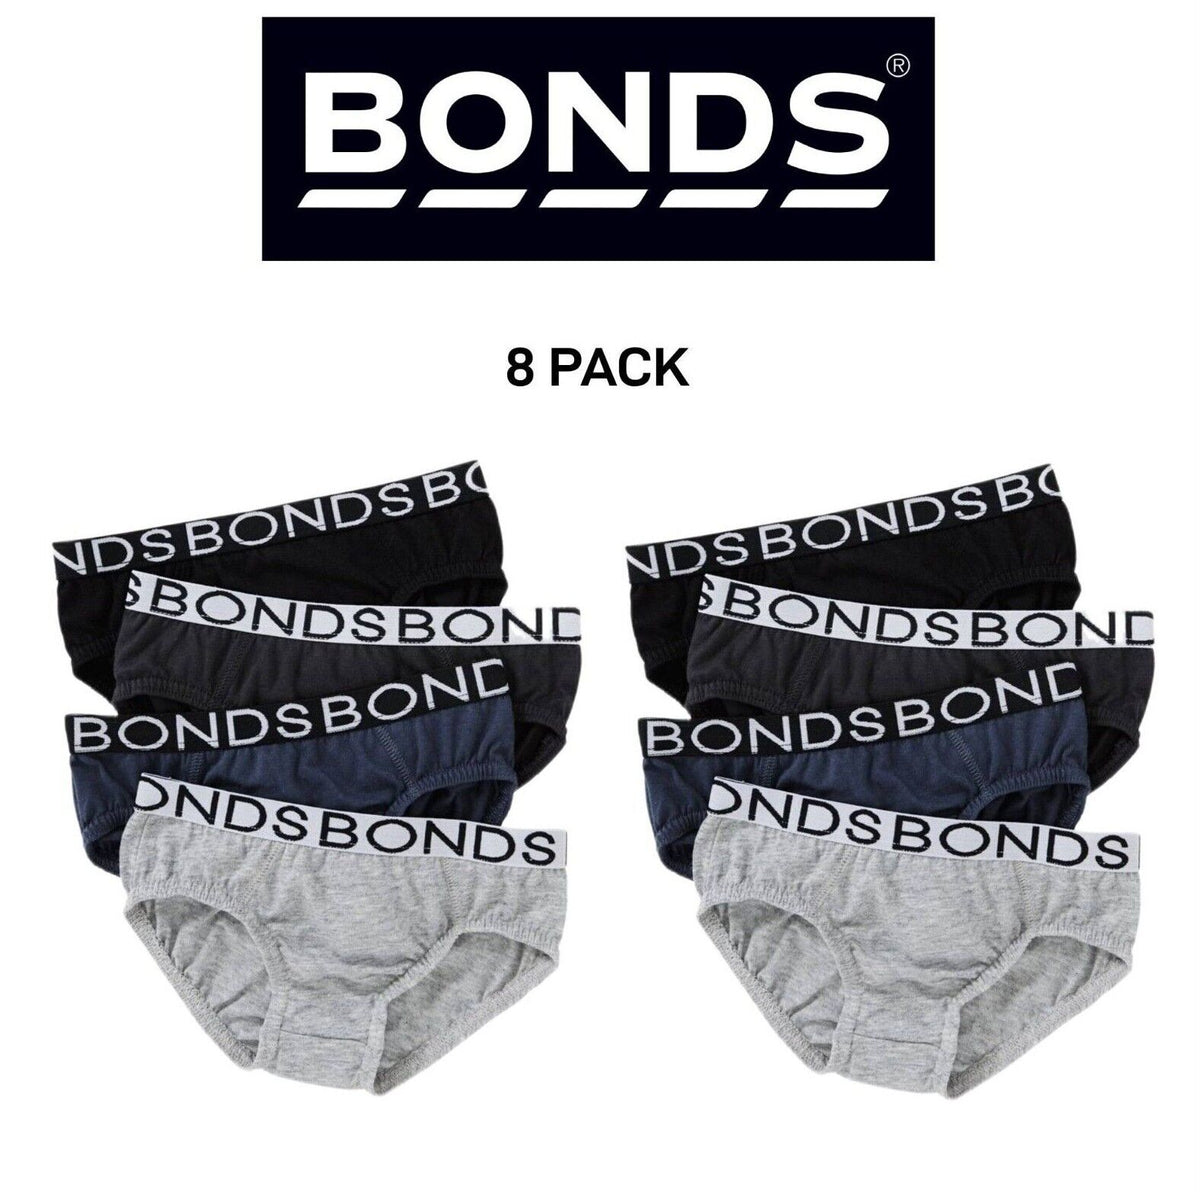 Bonds Boys Brief Underwear Breathable Cotton Rich Fabric 8 Pack UZW14A